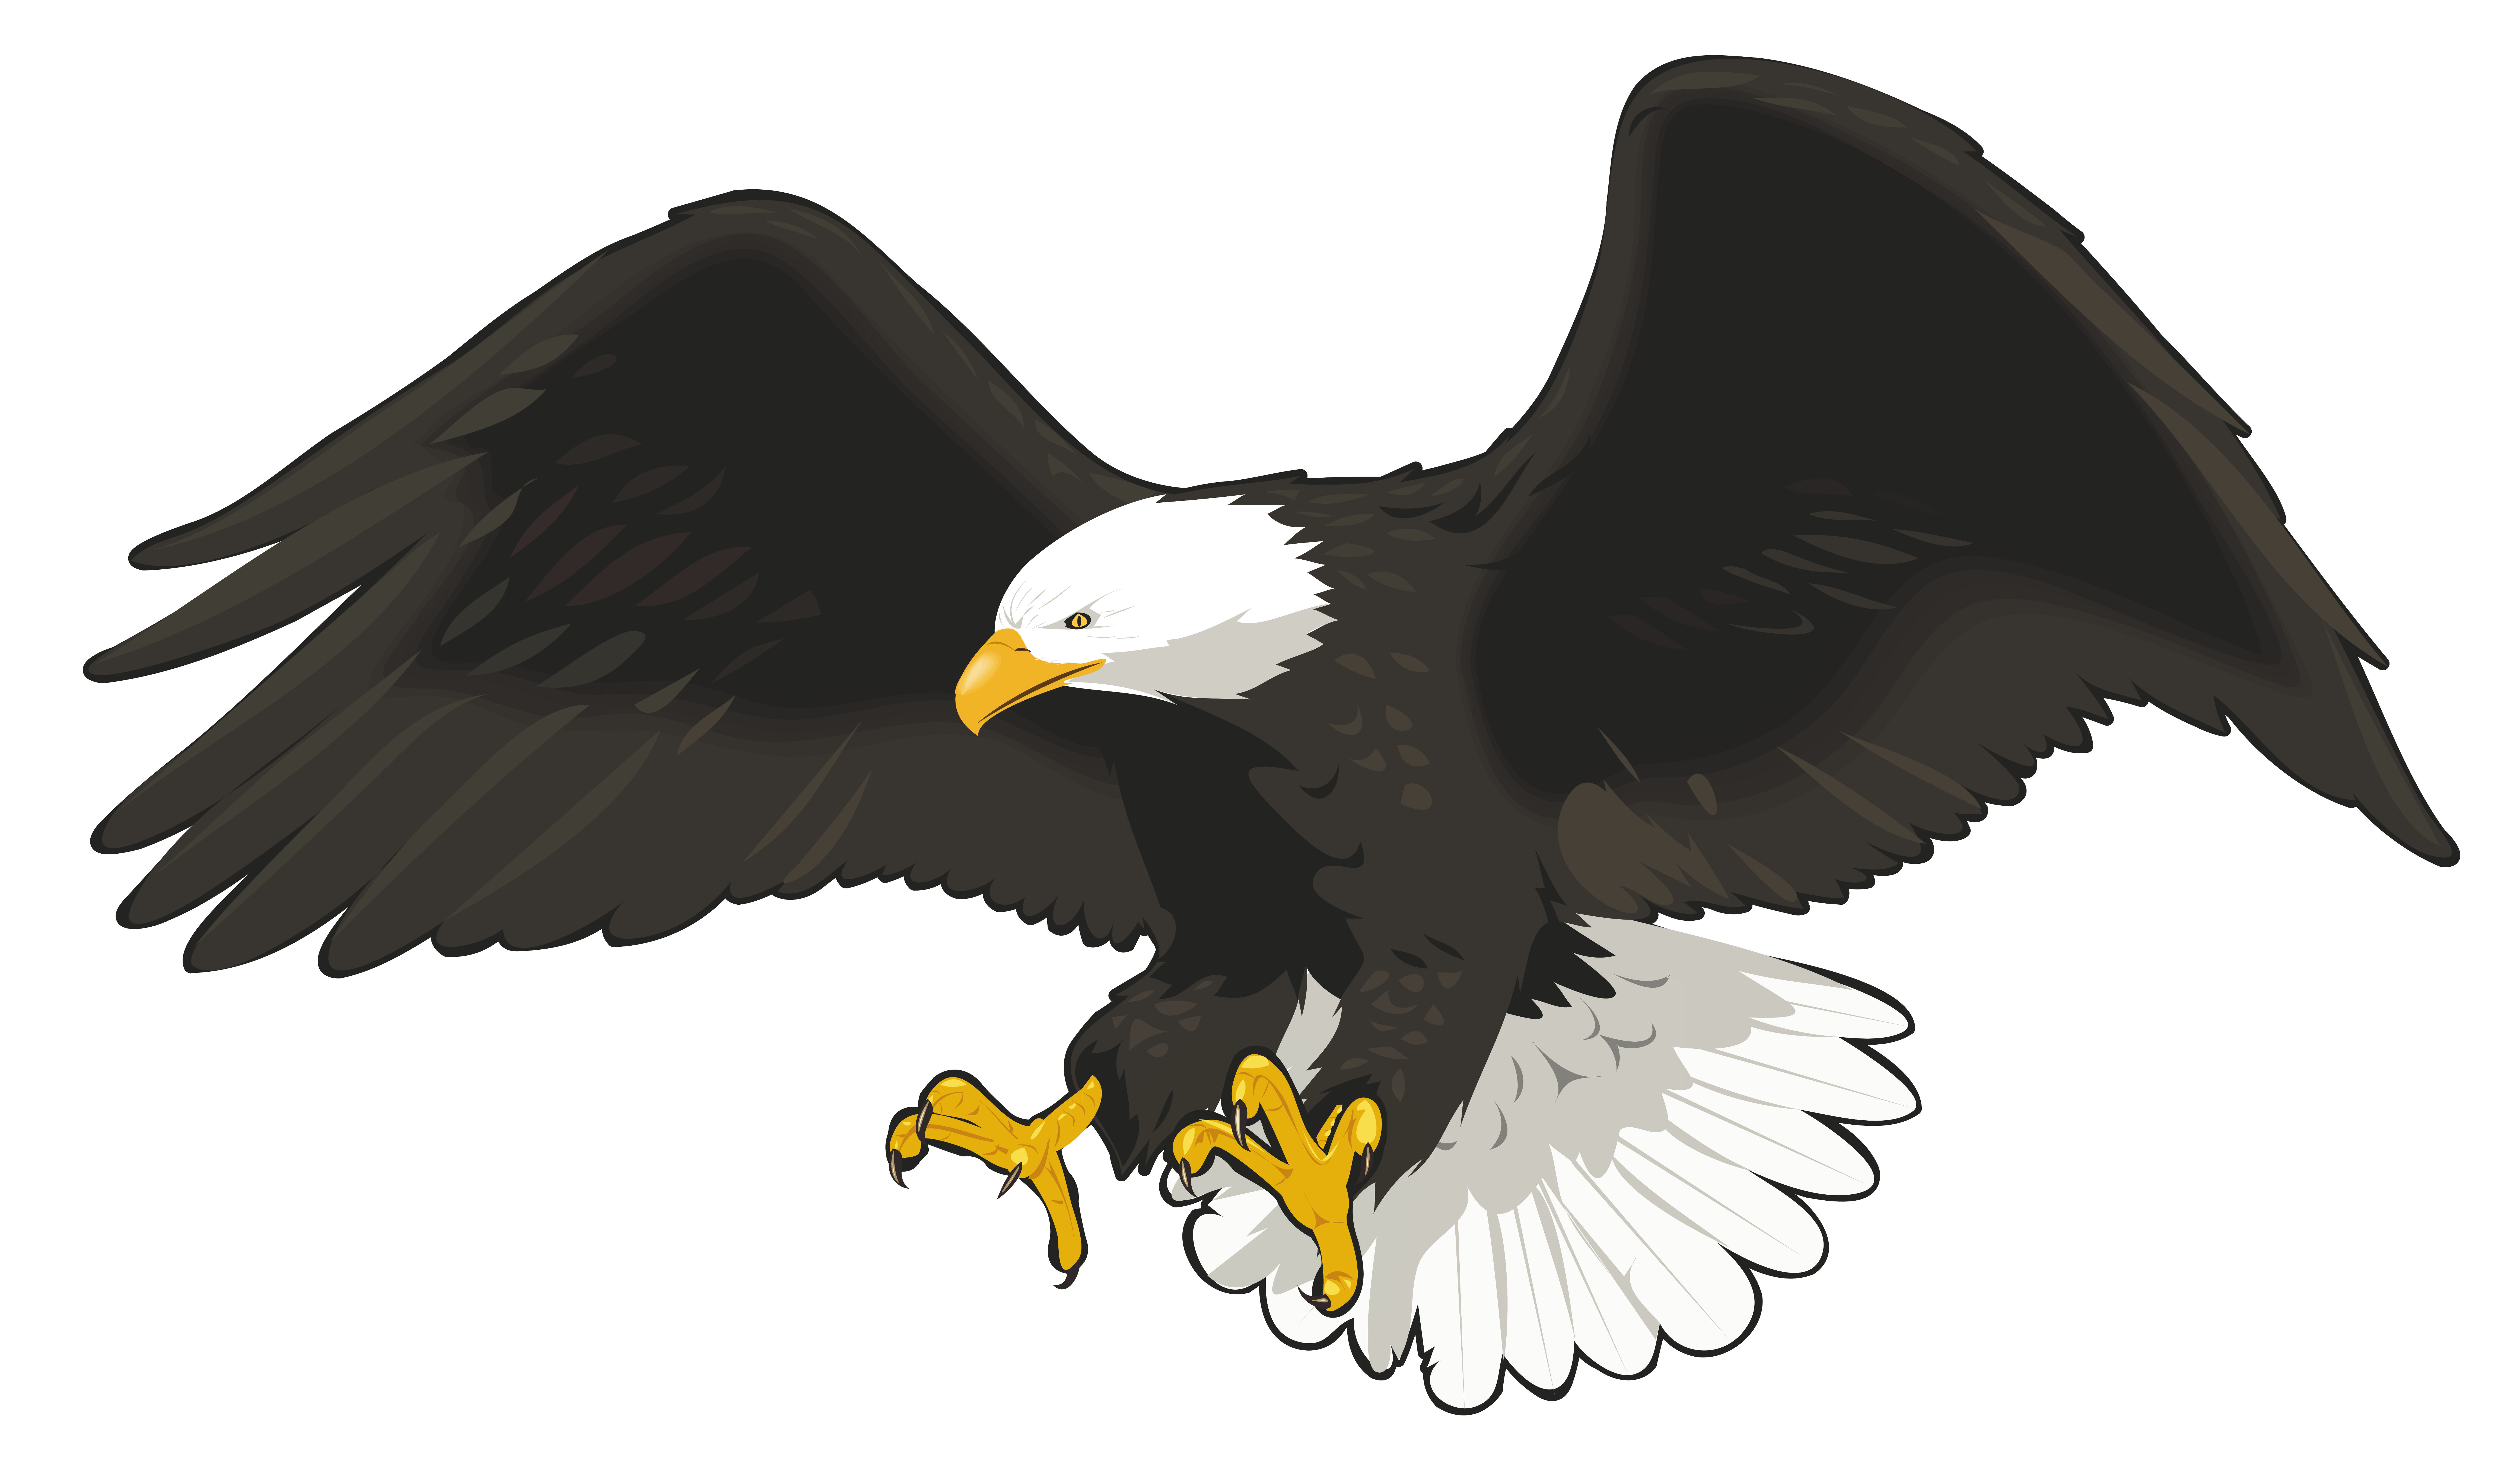 Eagle PNG PNG Clip Art Image.